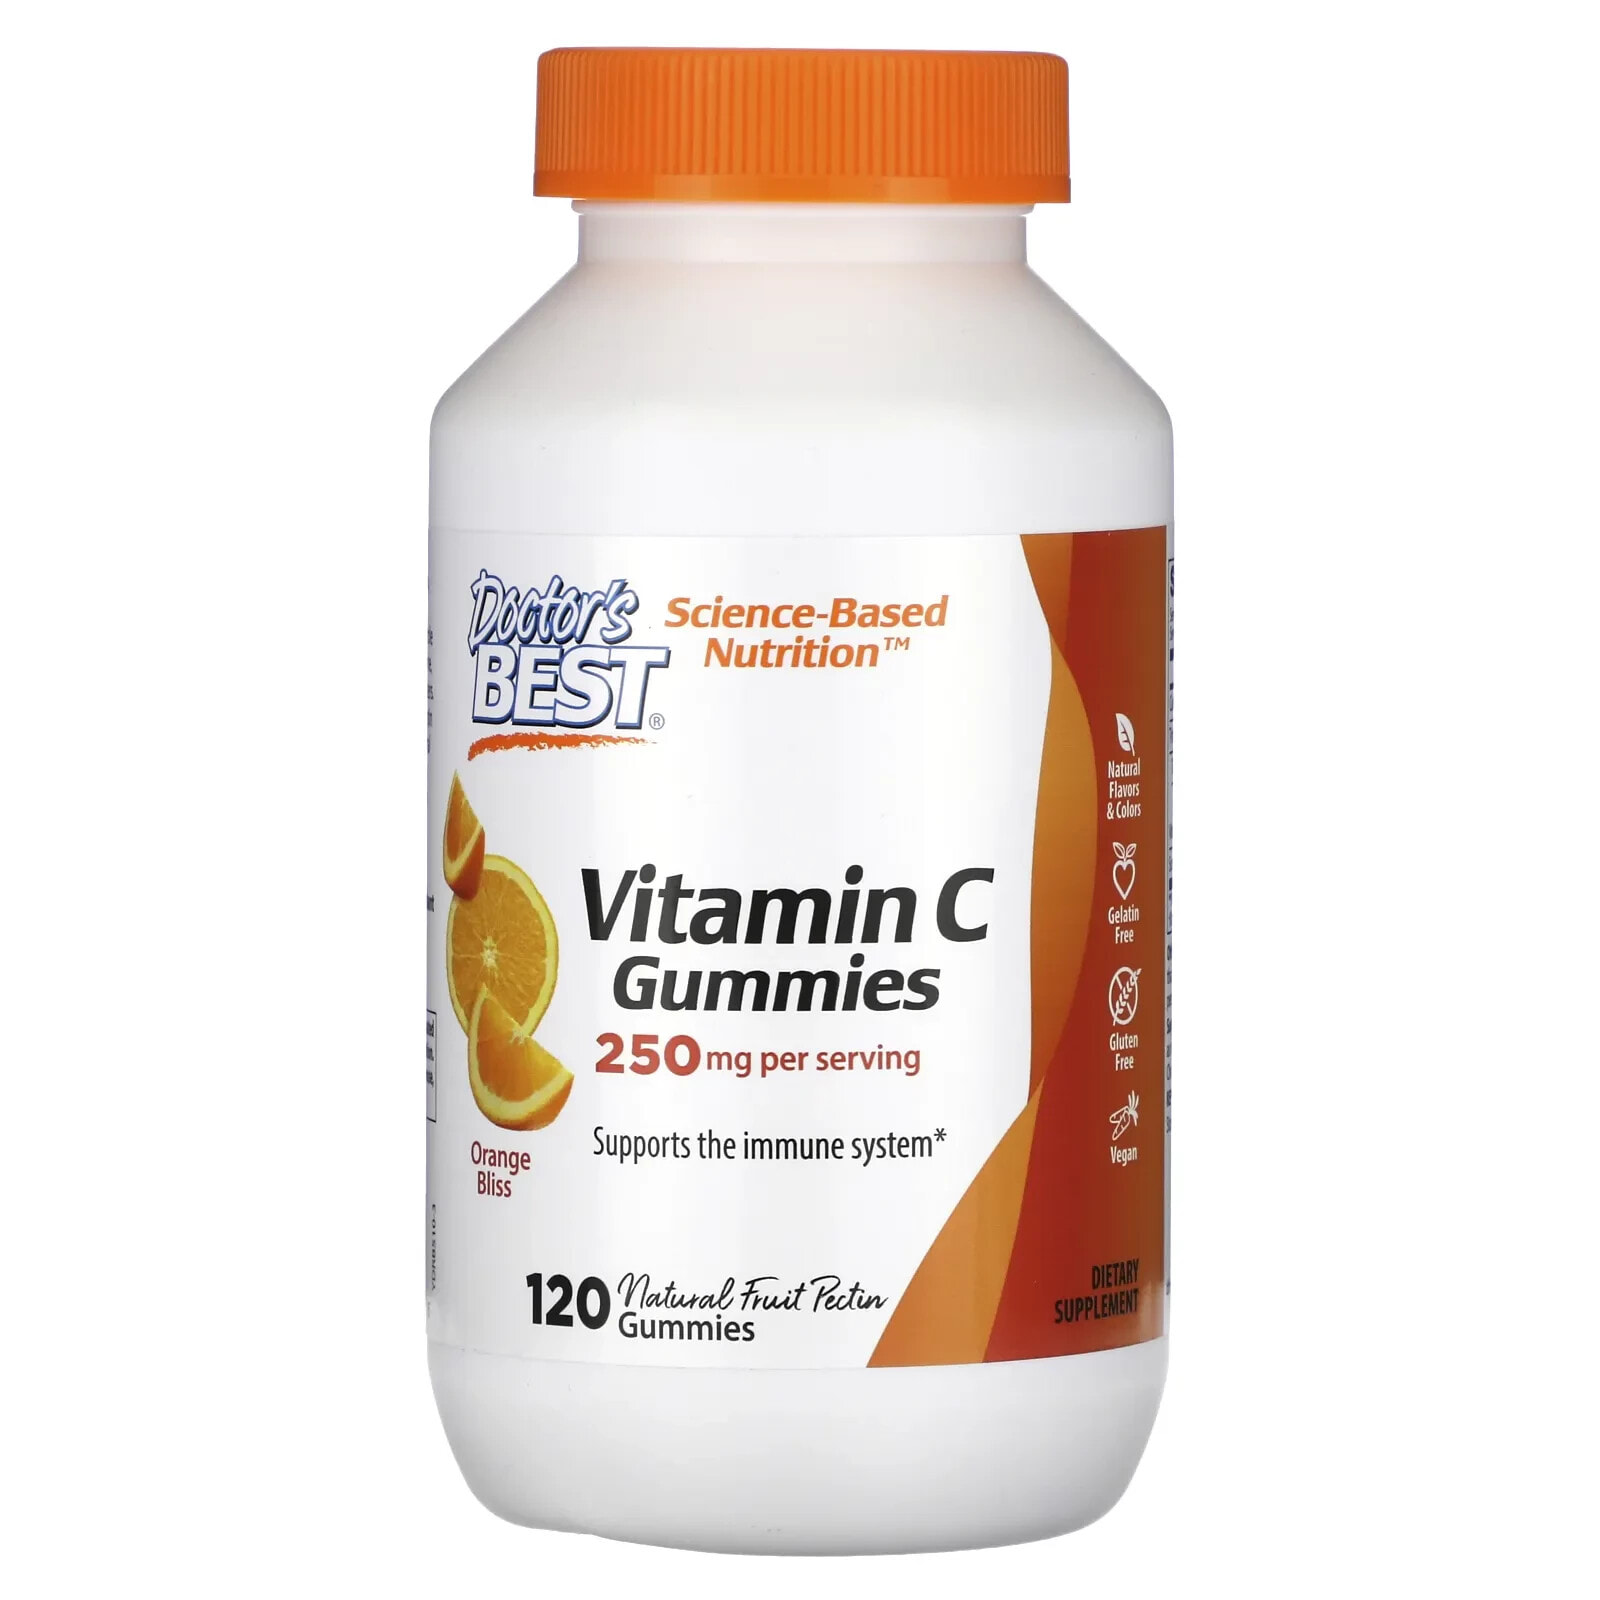 Vitamin C Gummies, Orange Bliss, 250 mg, 120 Gummies (125 mg per Gummy)